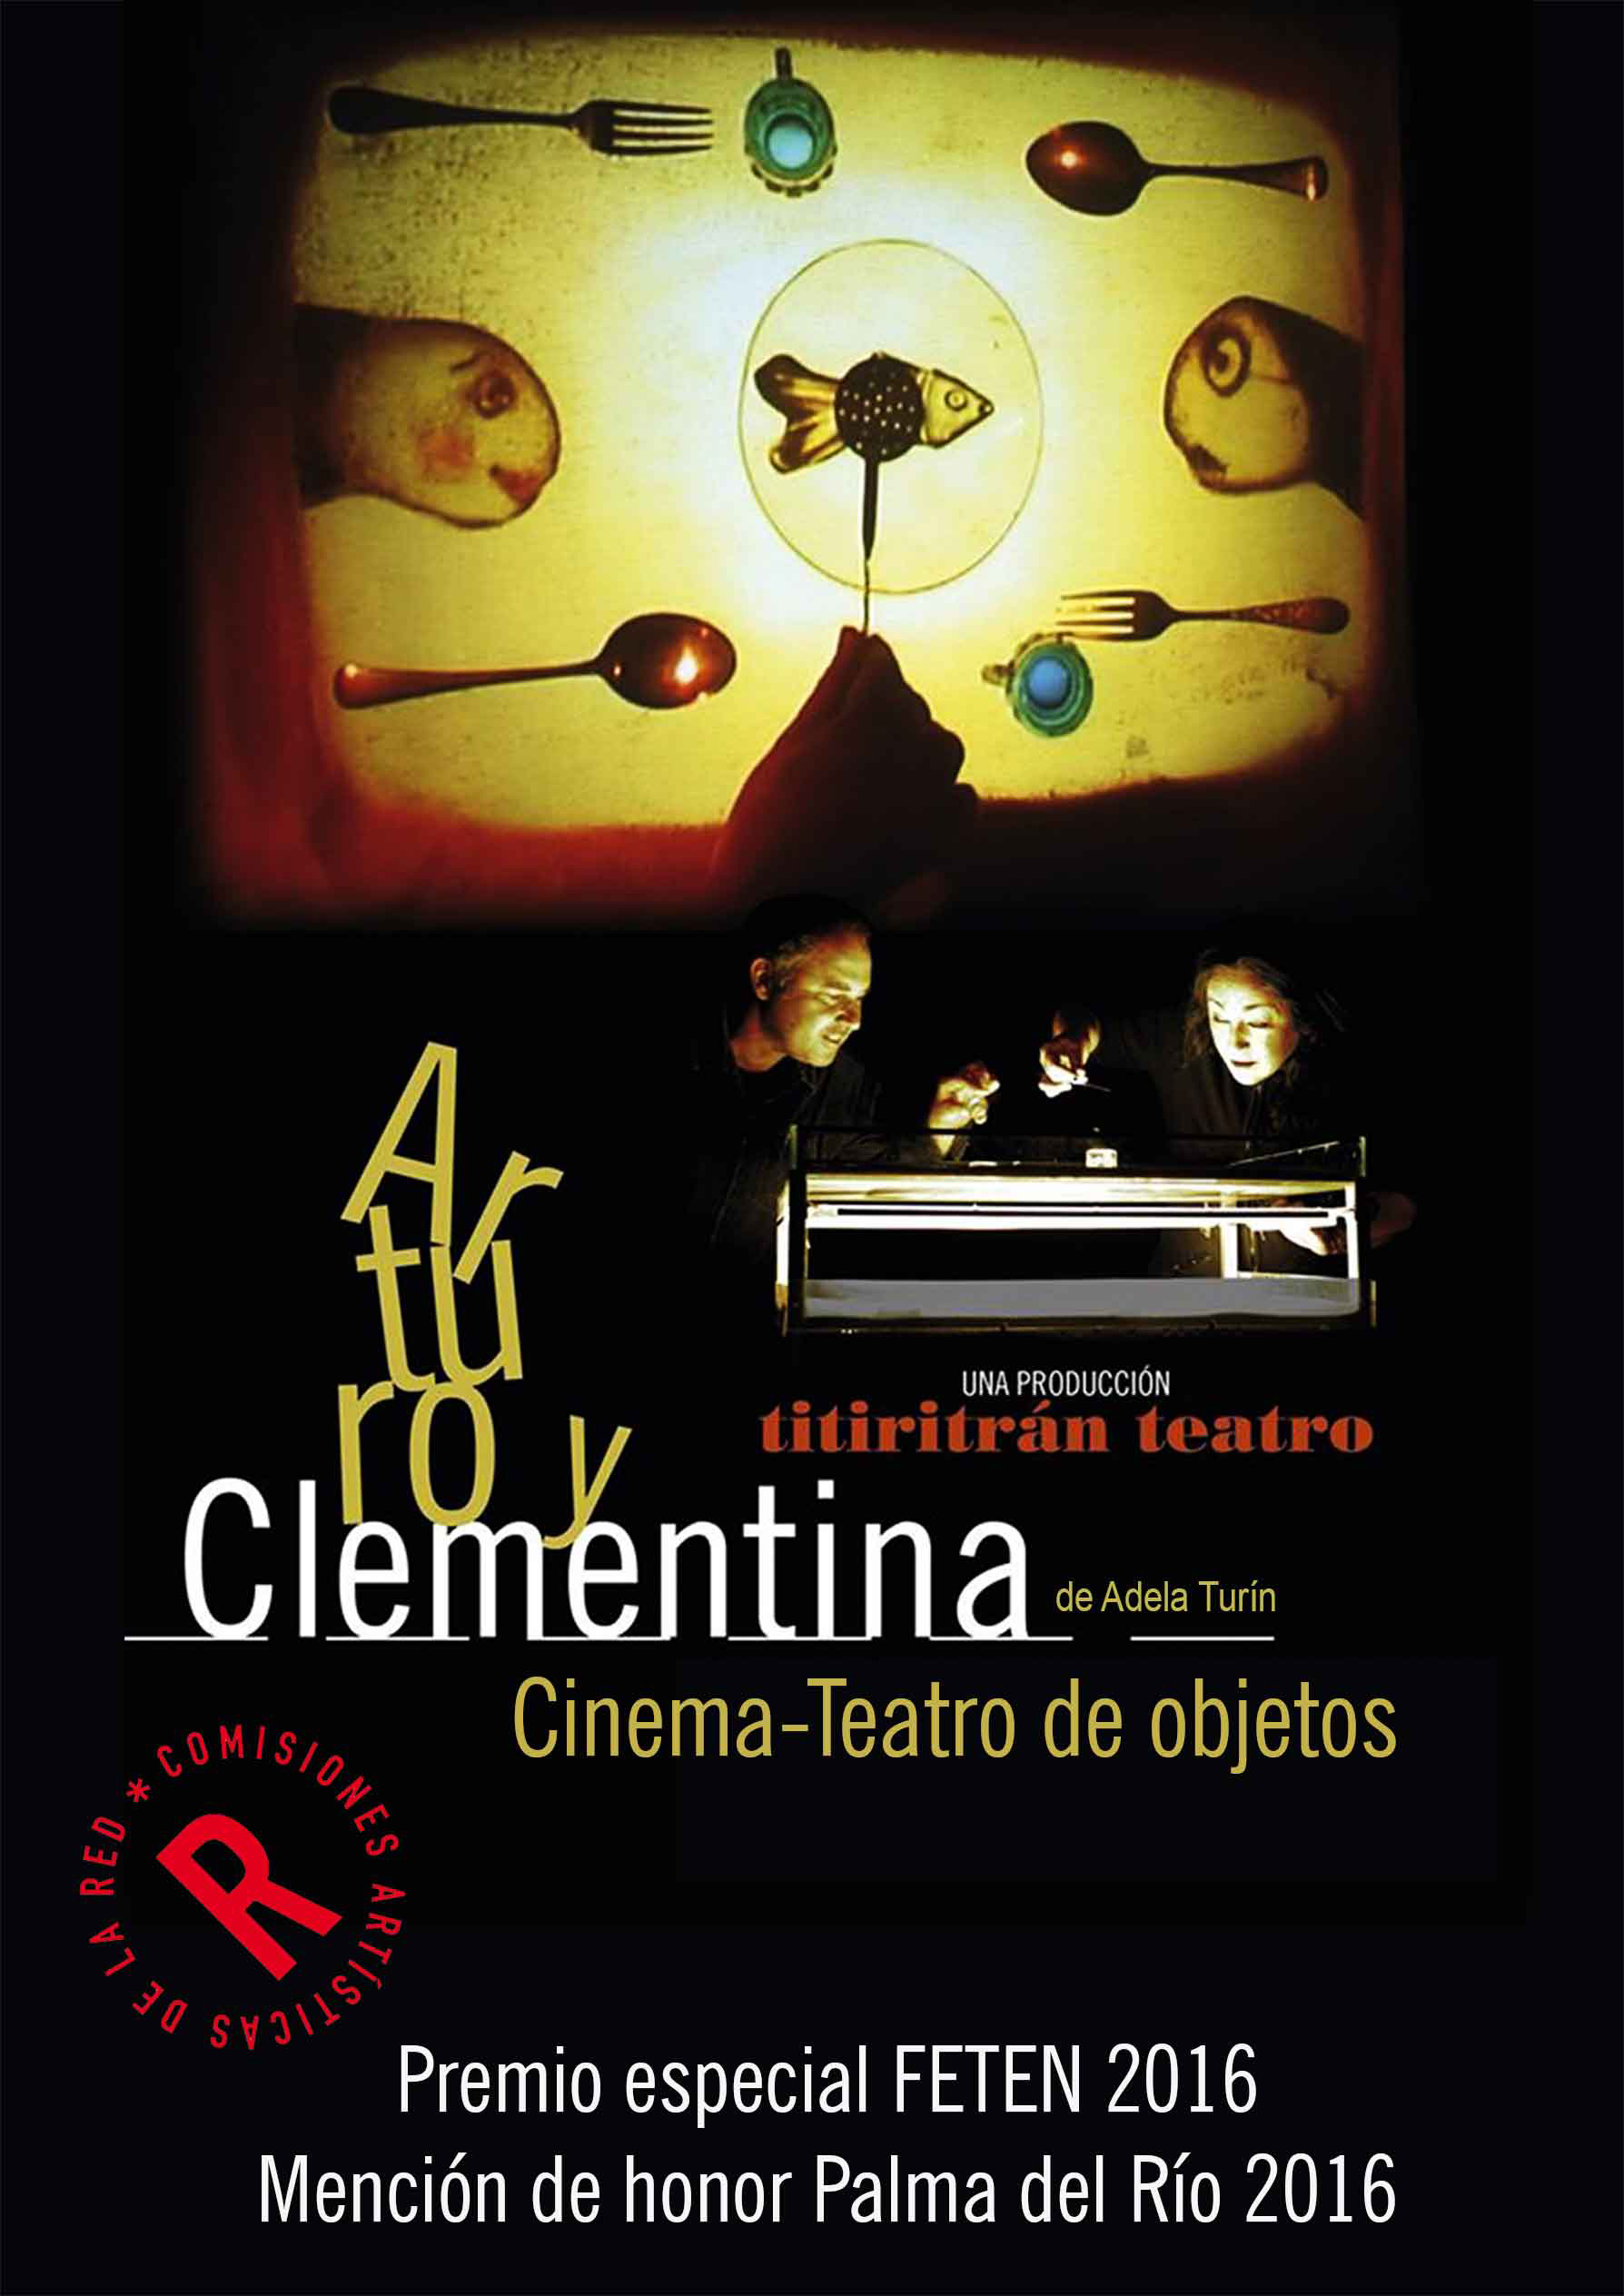 2Titiritrn--Arturo-y-Clementina